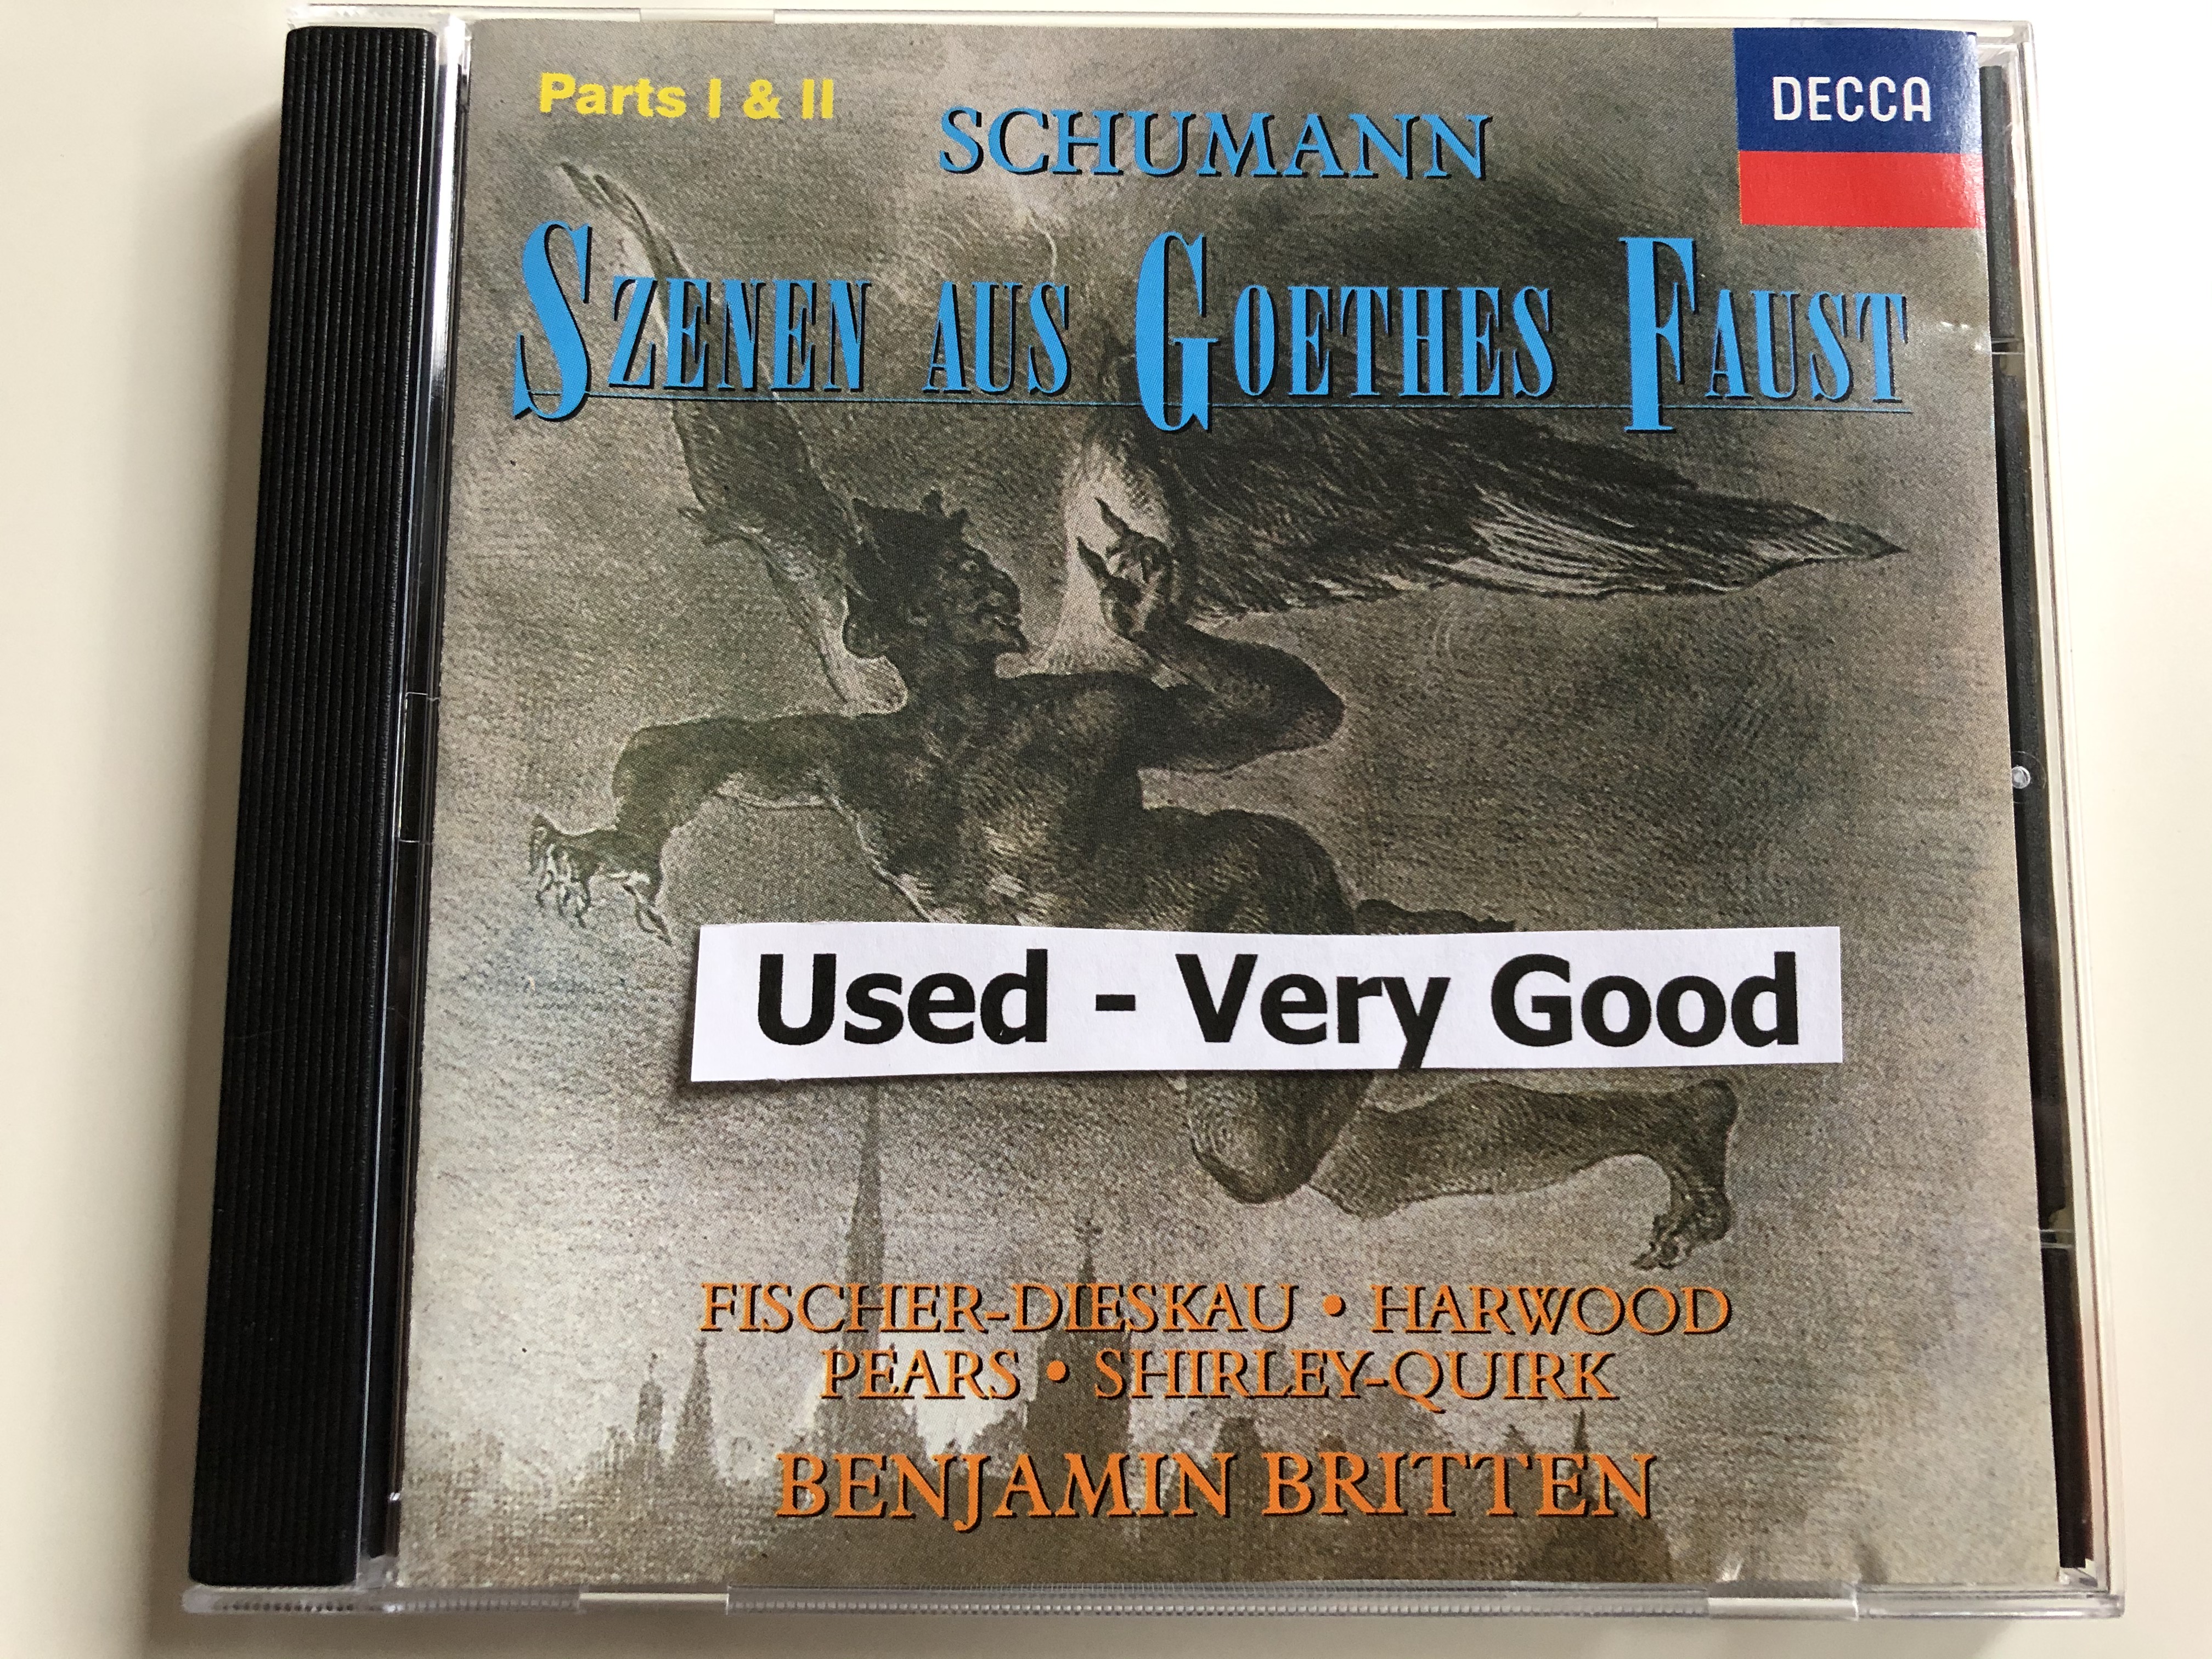 parts-i-ii-schumann-szenen-aus-goethes-faust-fischer-dieskau-harwood-pears-shirley-quirk-benjamin-britten-decca-audio-cd-1996-452673-2-1-.jpg